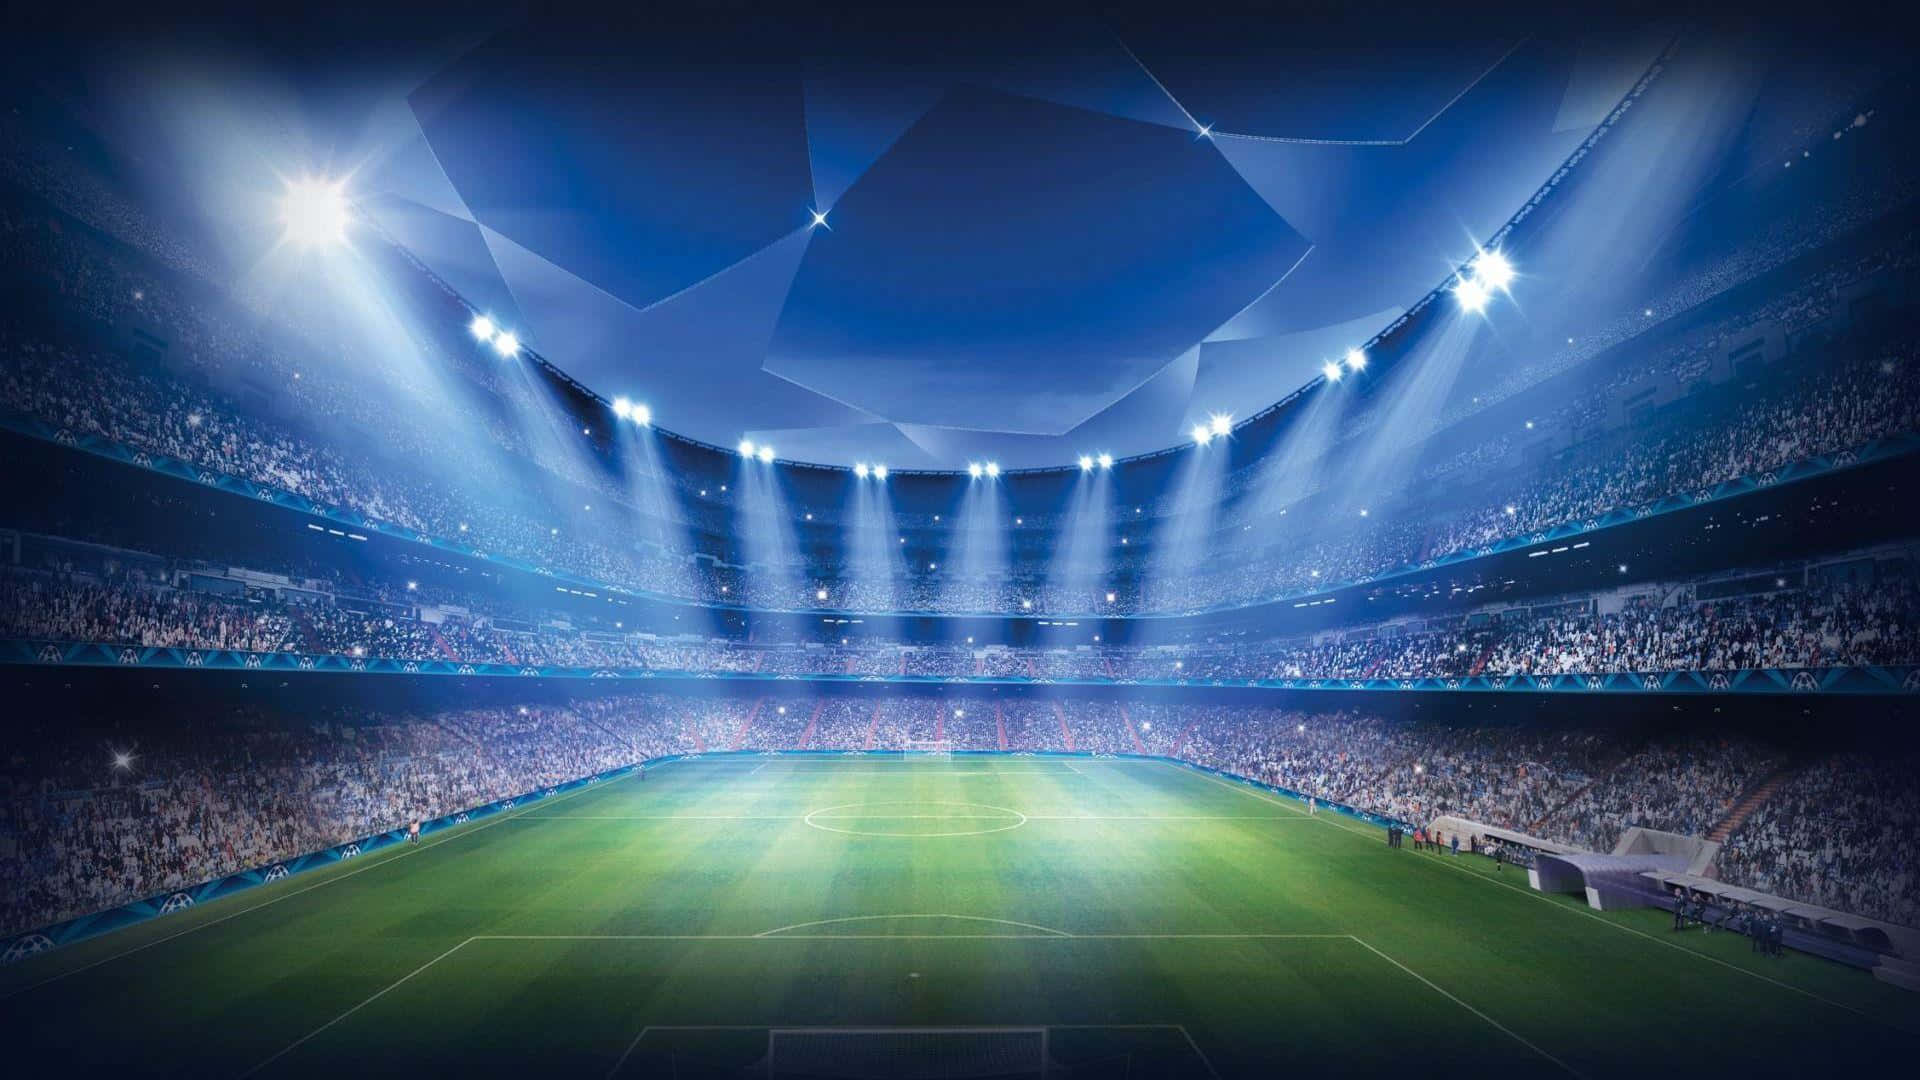 Super Cool Uefa Champions League Digital Art Background